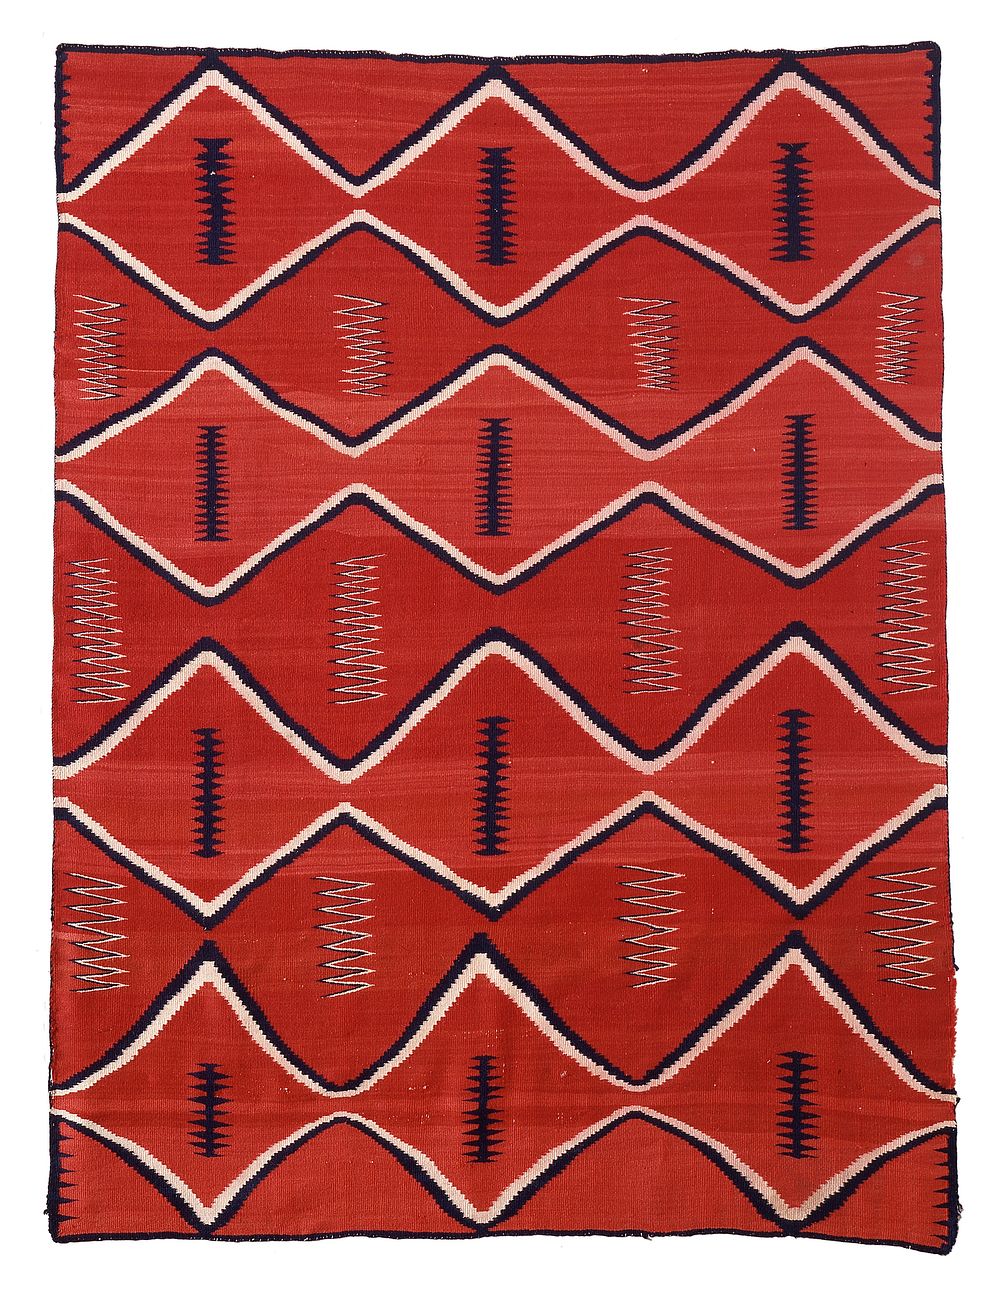 Serape (1865&ndash;80) textile in high resolution. Original from the Saint Louis Art Museum. 